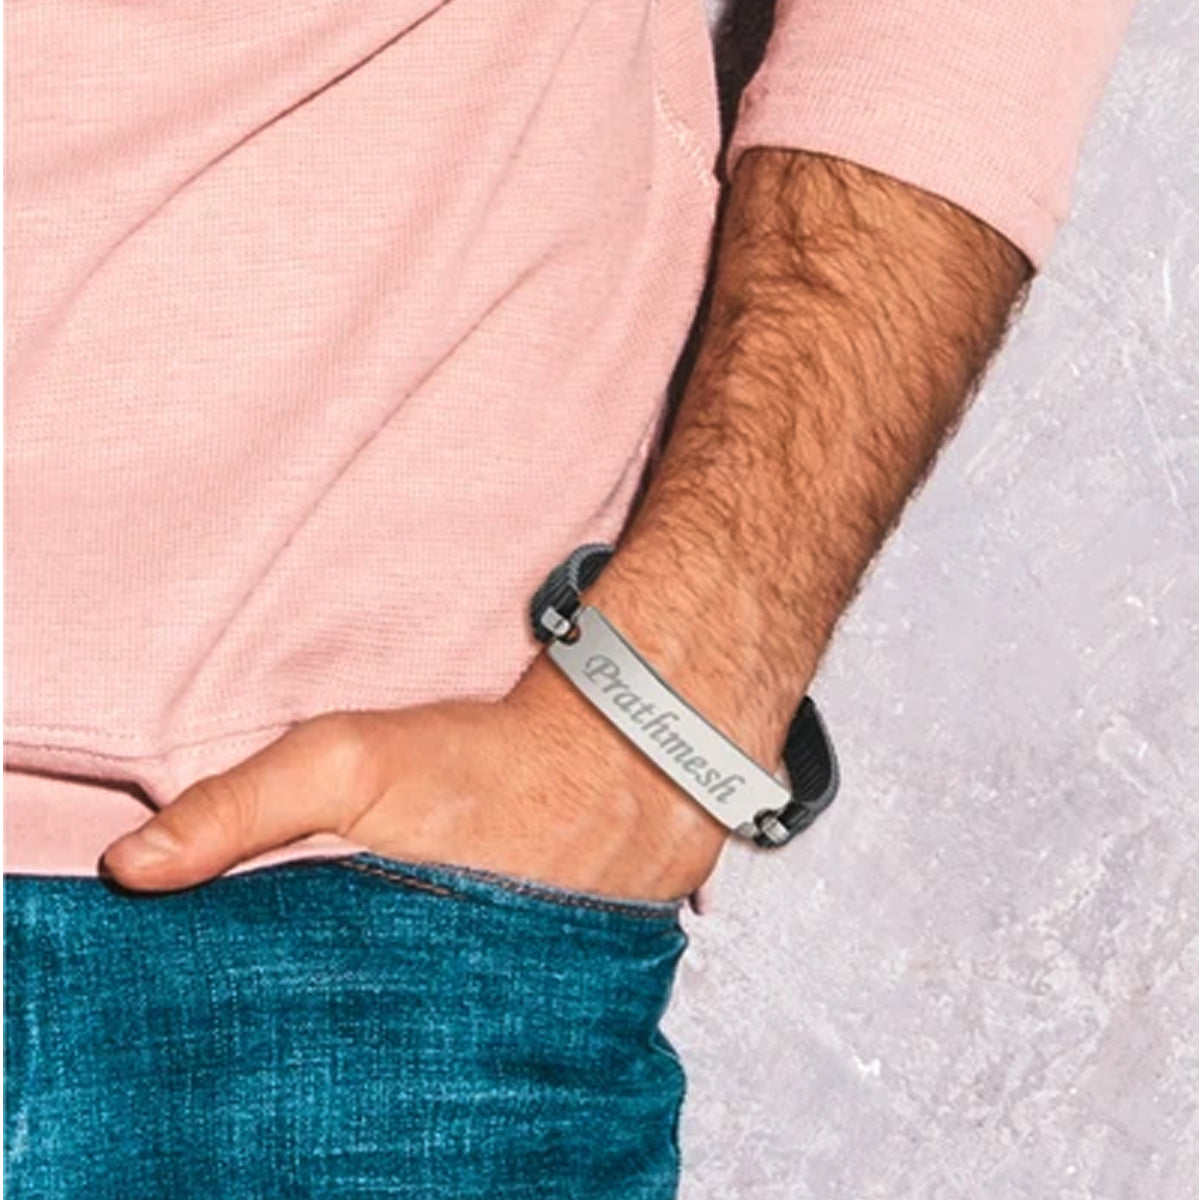 Personalized Engraved Men Leather Bar Bracelet, Custom Men's Jewelry, Name  Bracelet, Initial Bracelet, Coordinates Bracelet, Date Bracelet - Etsy |  Bracelets for men, Engraved leather bracelets, Initial bracelet